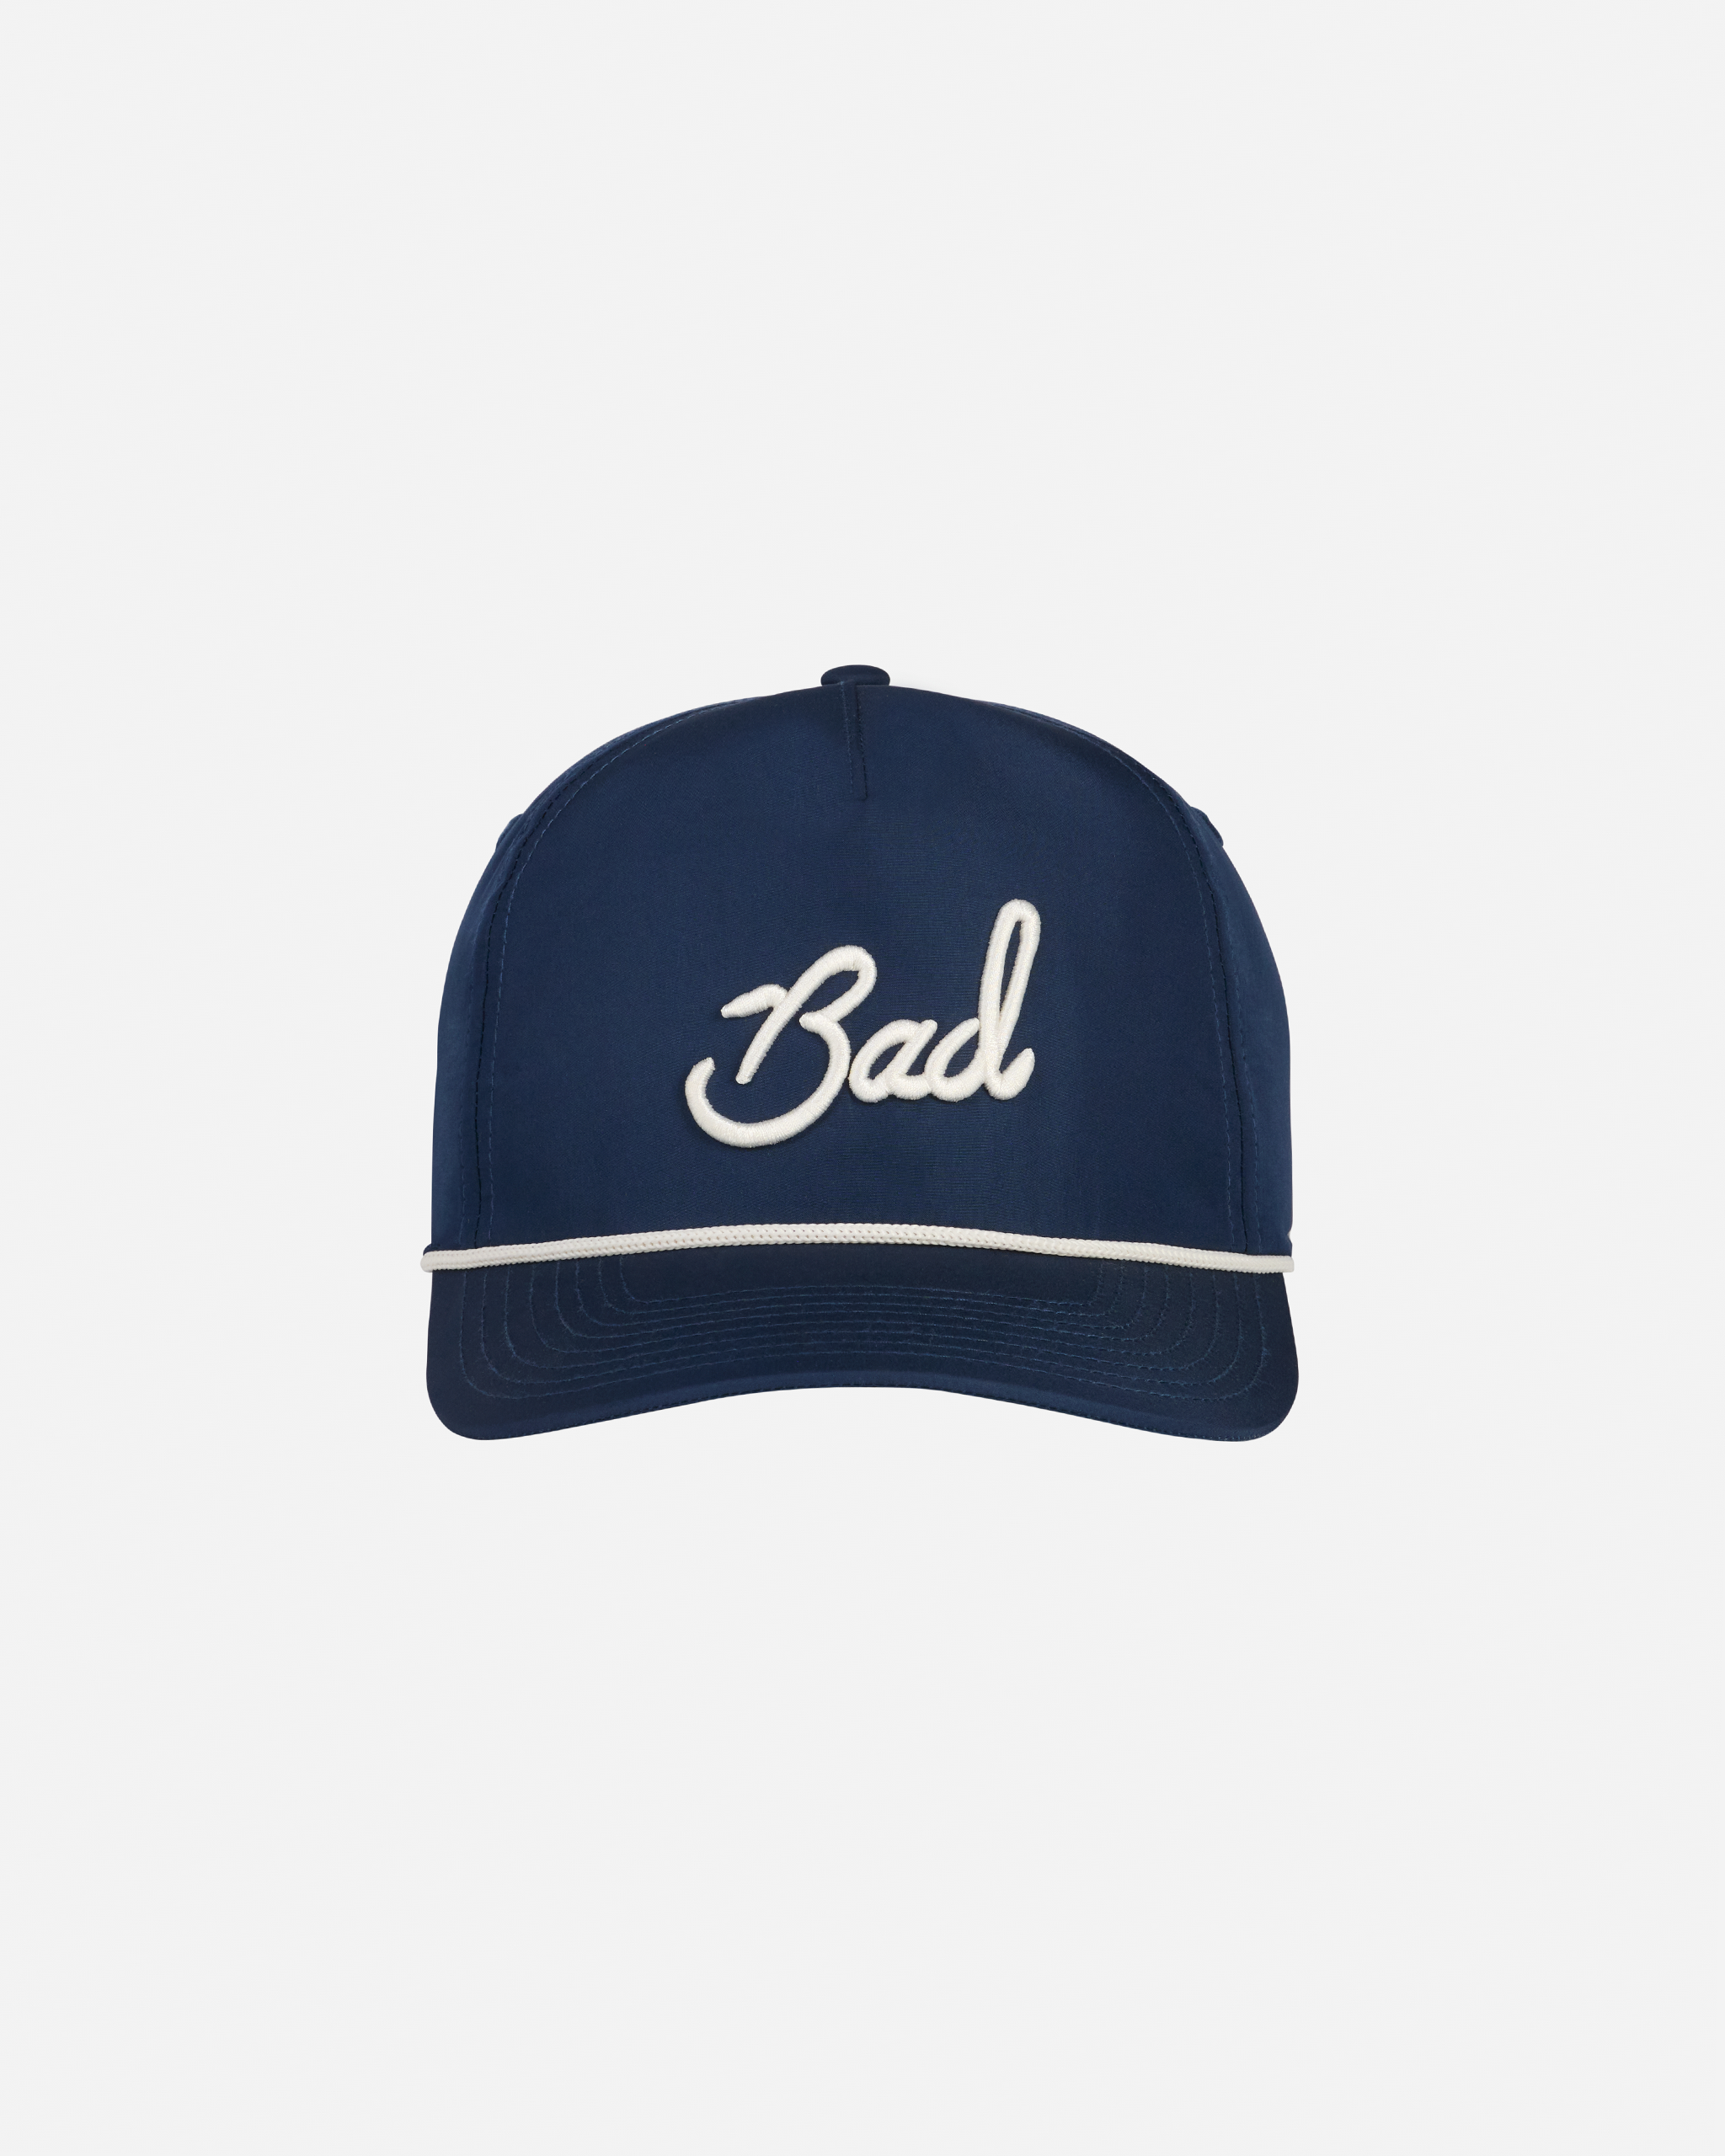 "Bad" Rope Golf Hat - Dark Navy - Bad Birdie